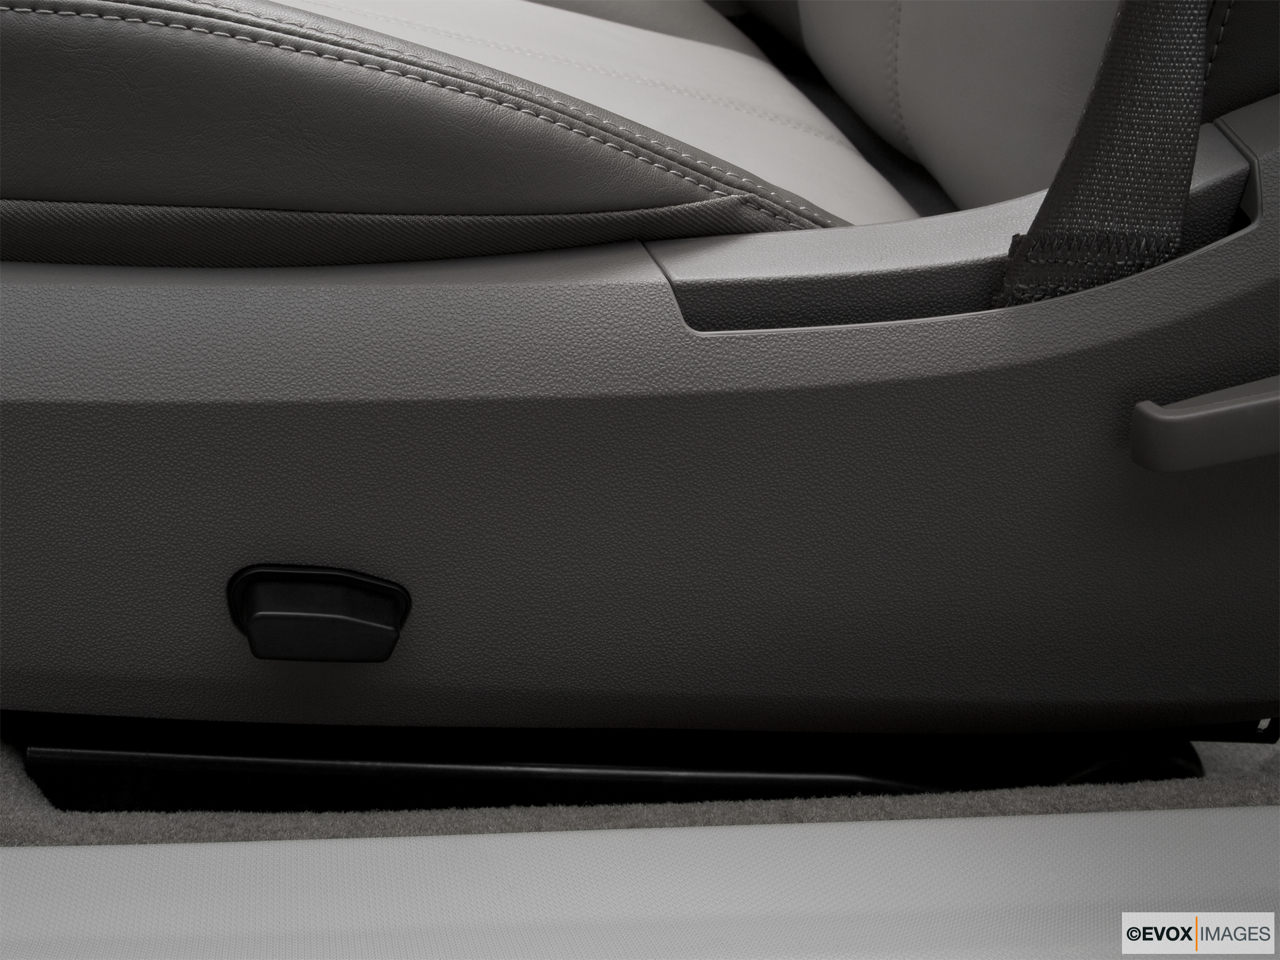 2010 Chrysler Sebring Touring Seat Adjustment Controllers. 